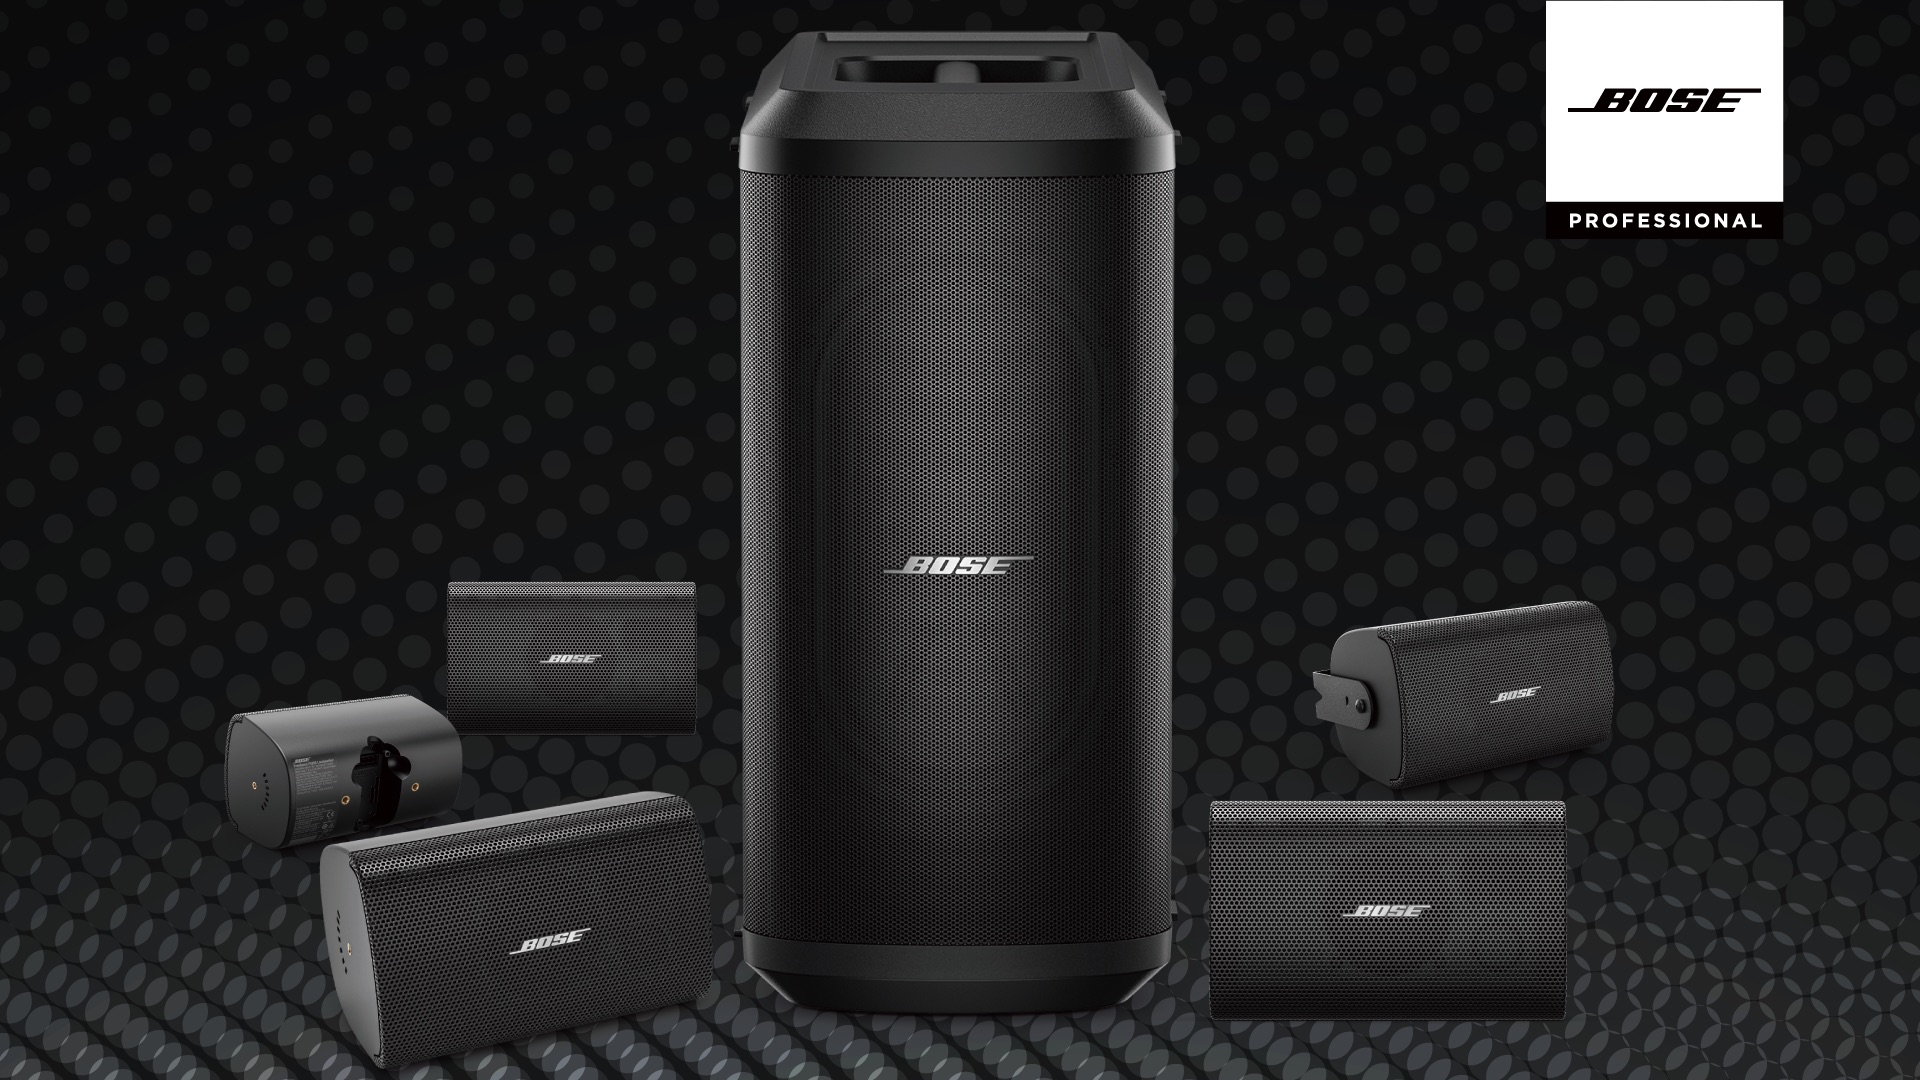 Bose 2系列 5.1/5.1.2聲道 家庭劇院揚聲器系統 震撼發表